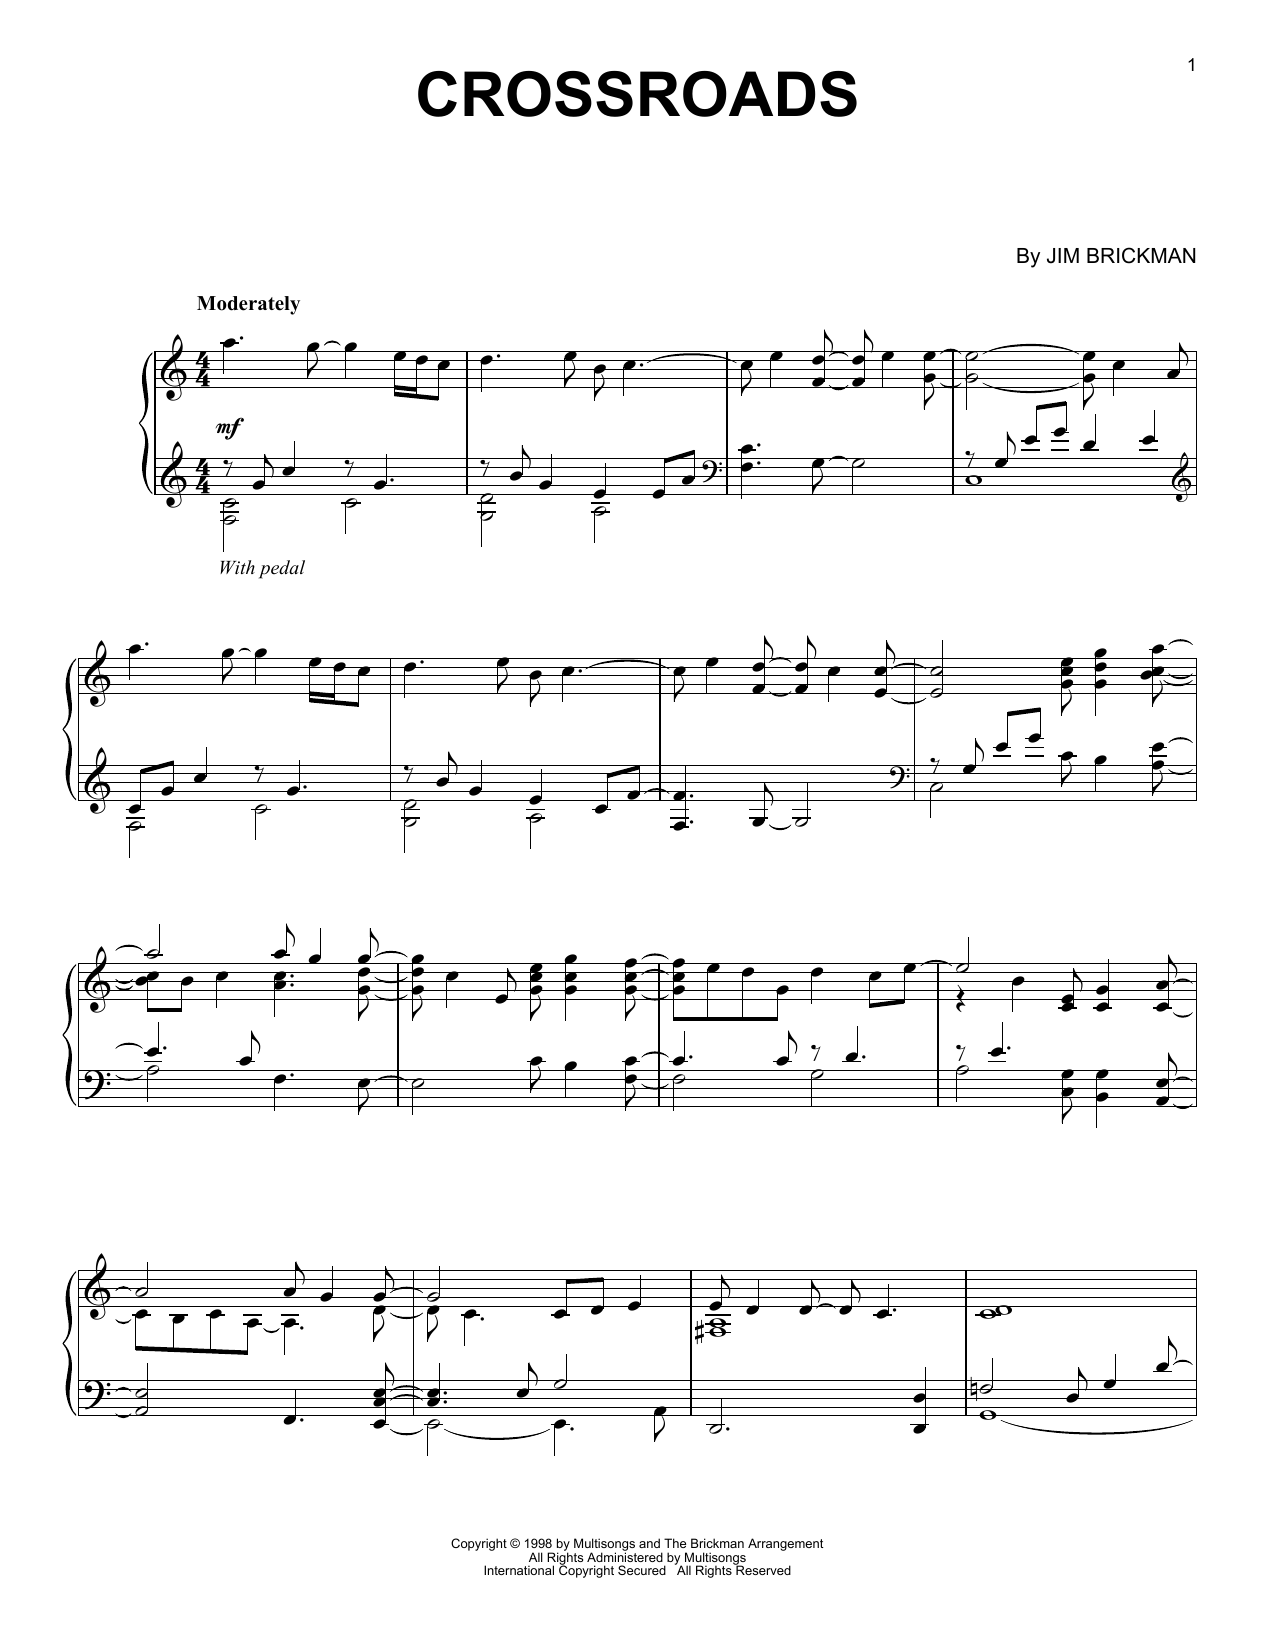 Jim Brickman Crossroads Sheet Music Notes & Chords for Piano - Download or Print PDF